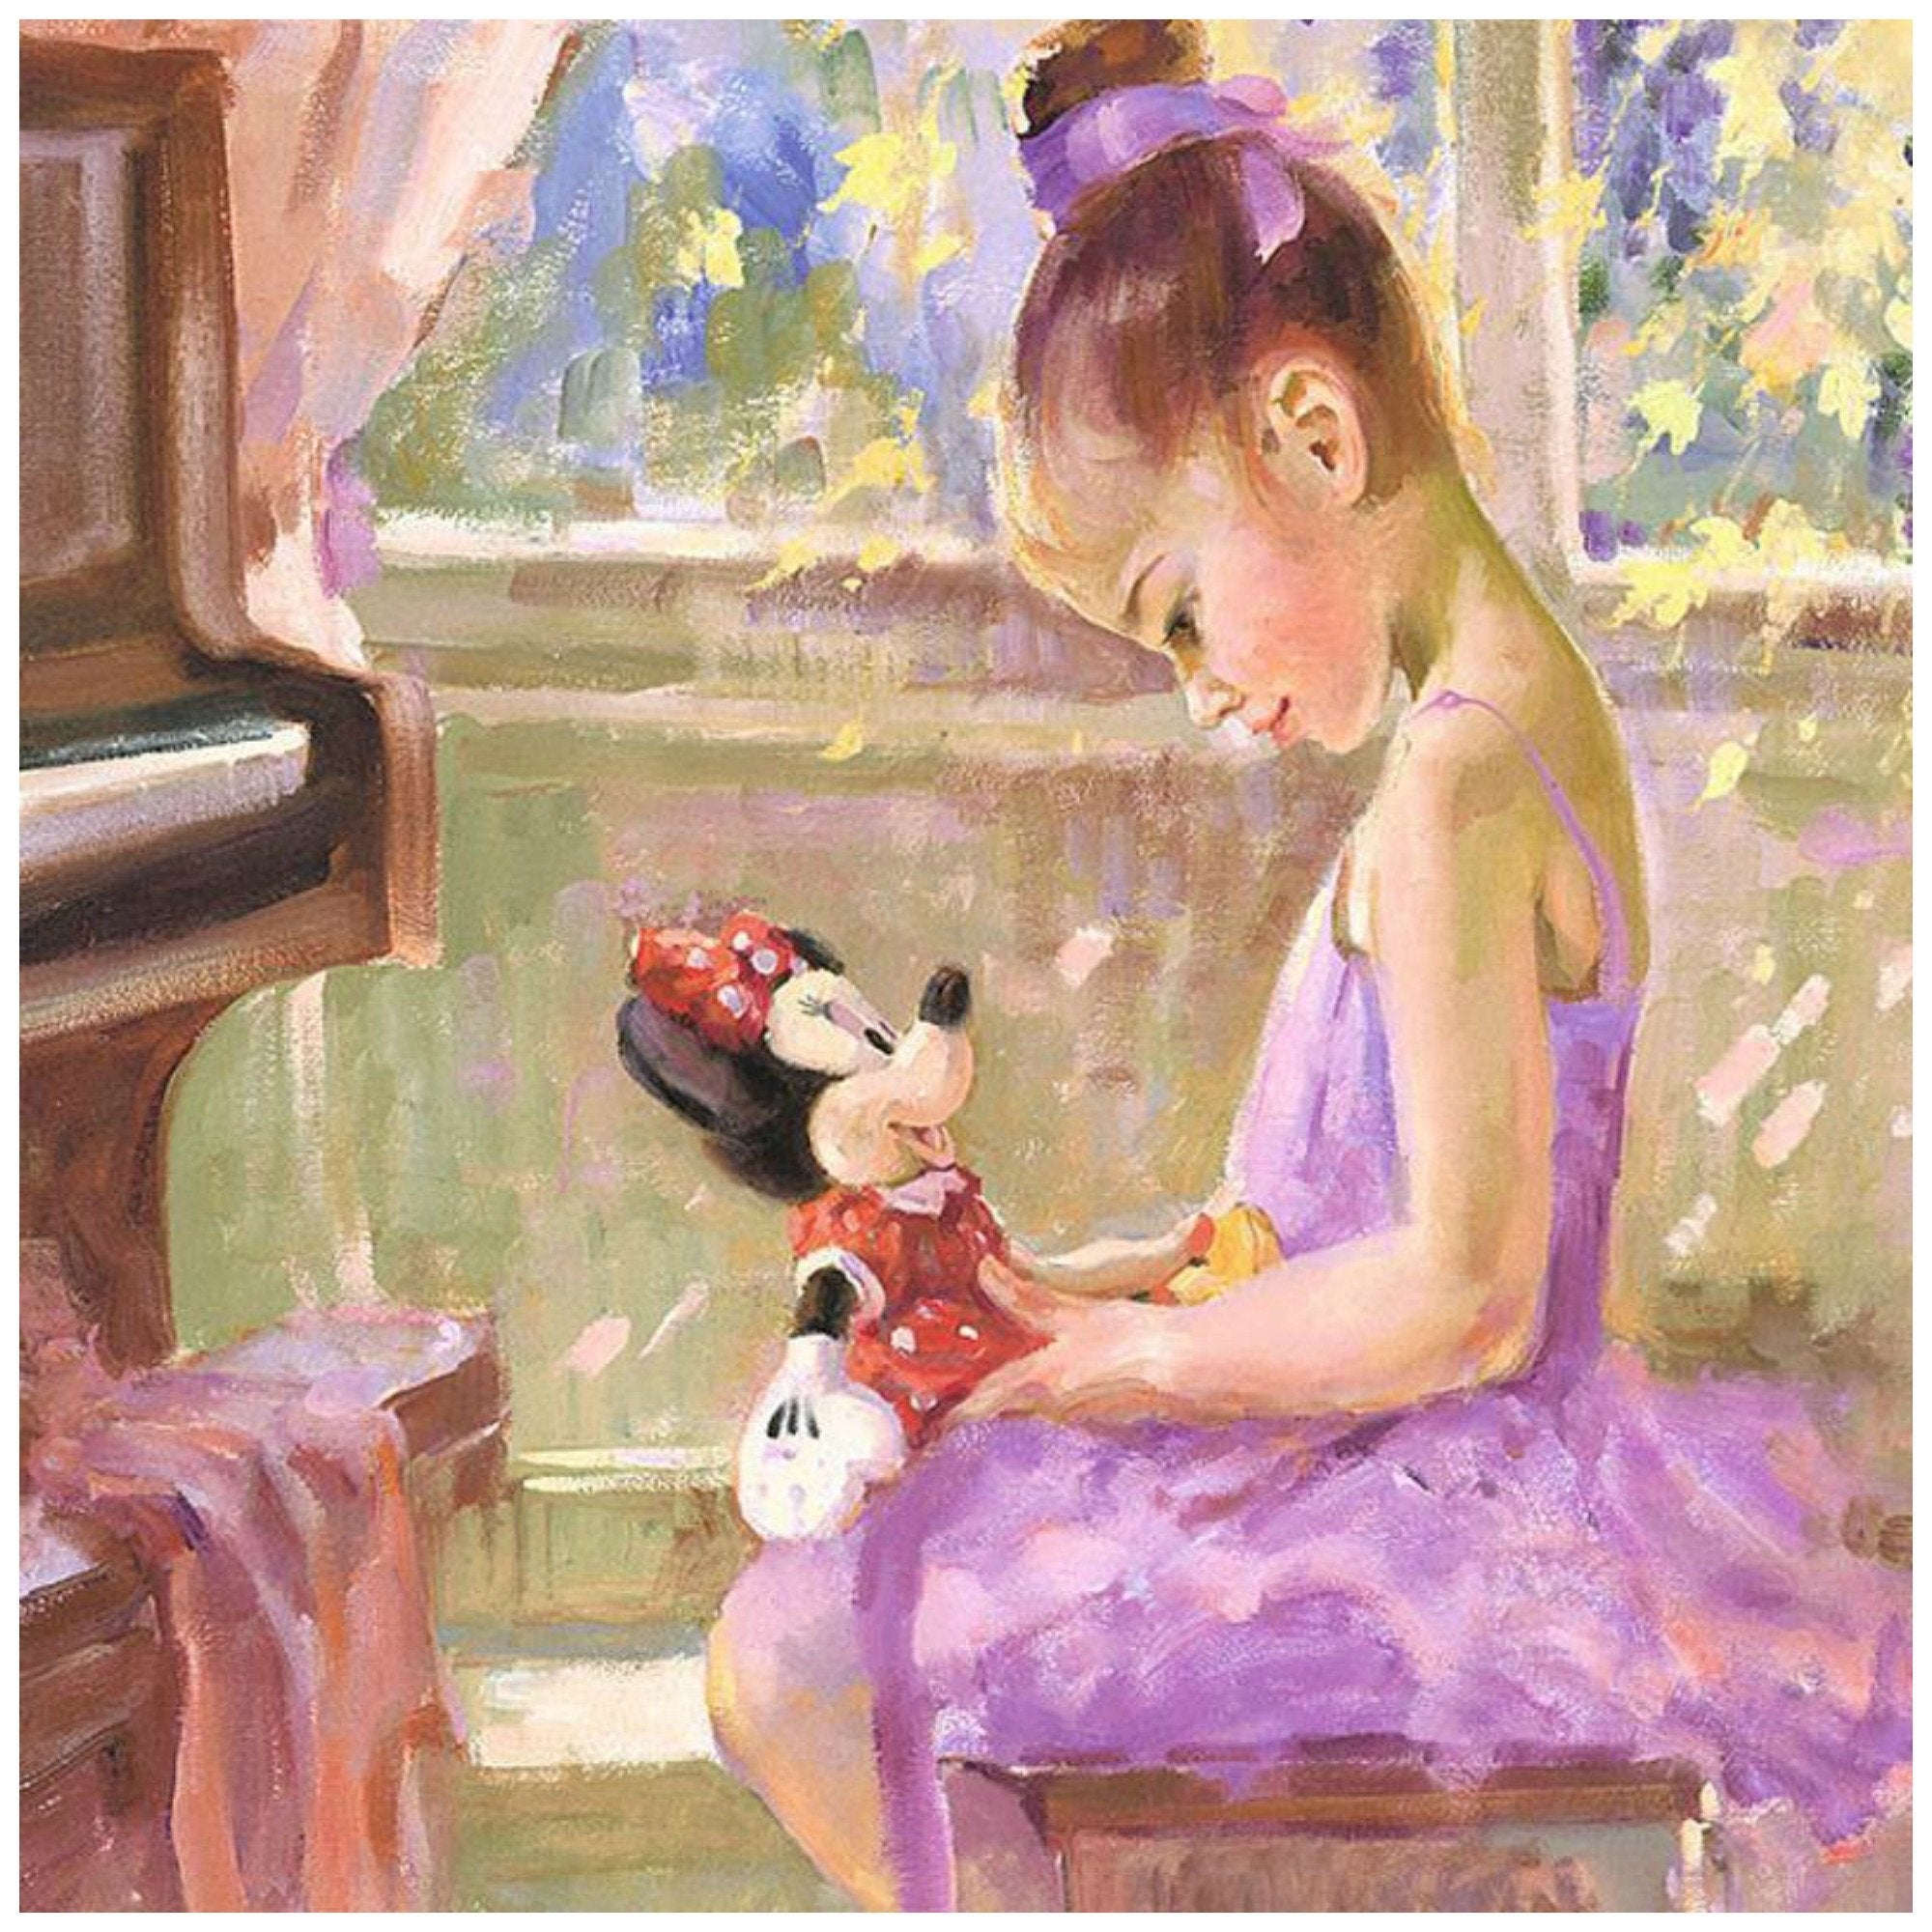 Joyful Inspiration by Irene Sheri  A young ballerina plays with her Minnie stuff toy - closeup